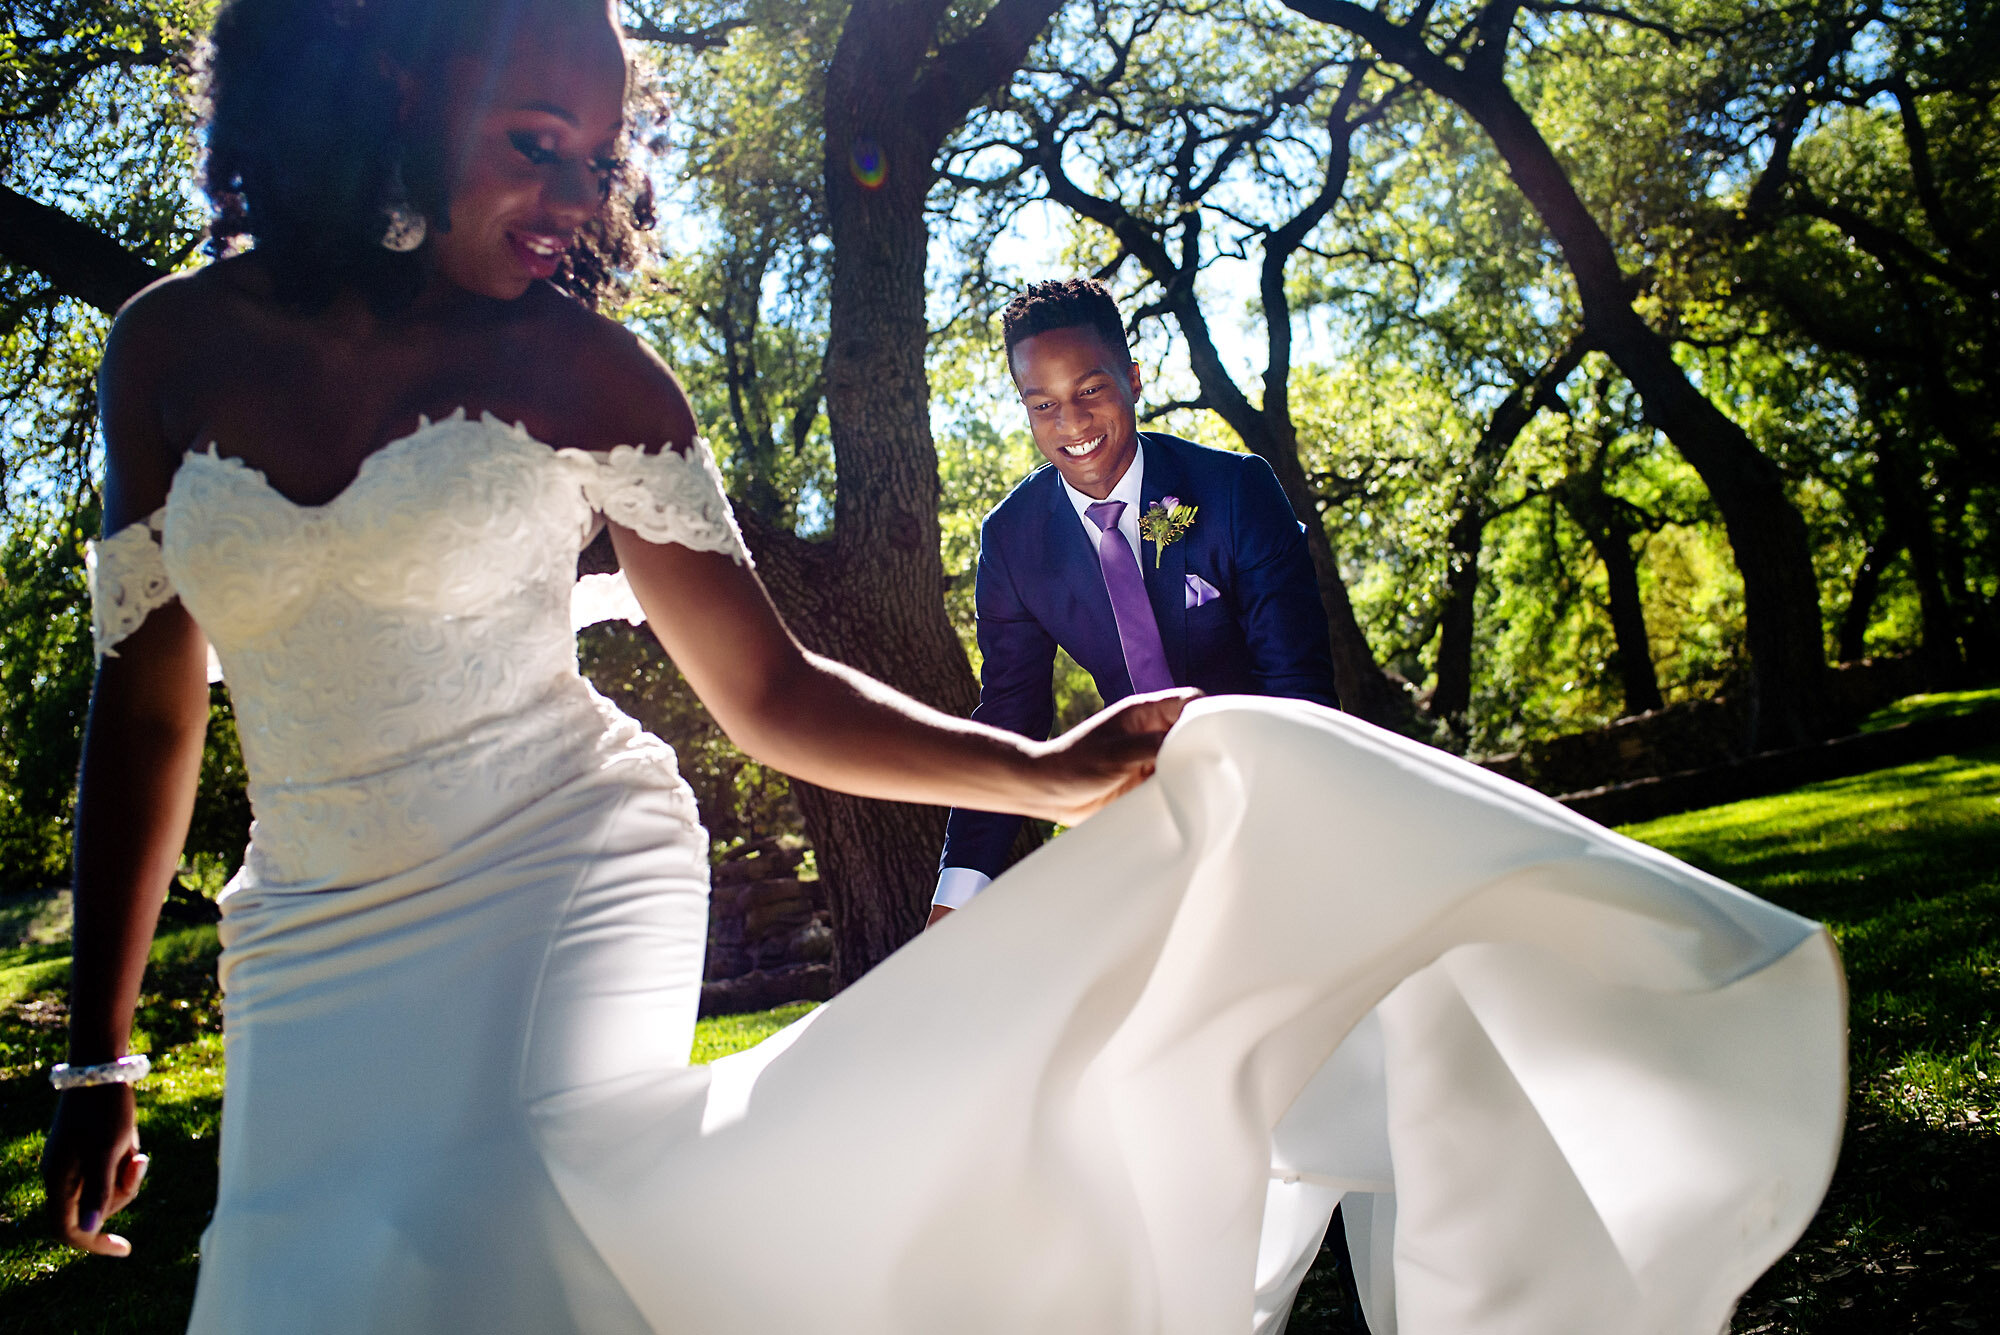 17-Austin-wedding-photographer-Jide-Alakija-groom helping bride spread her dress.jpg.JPG